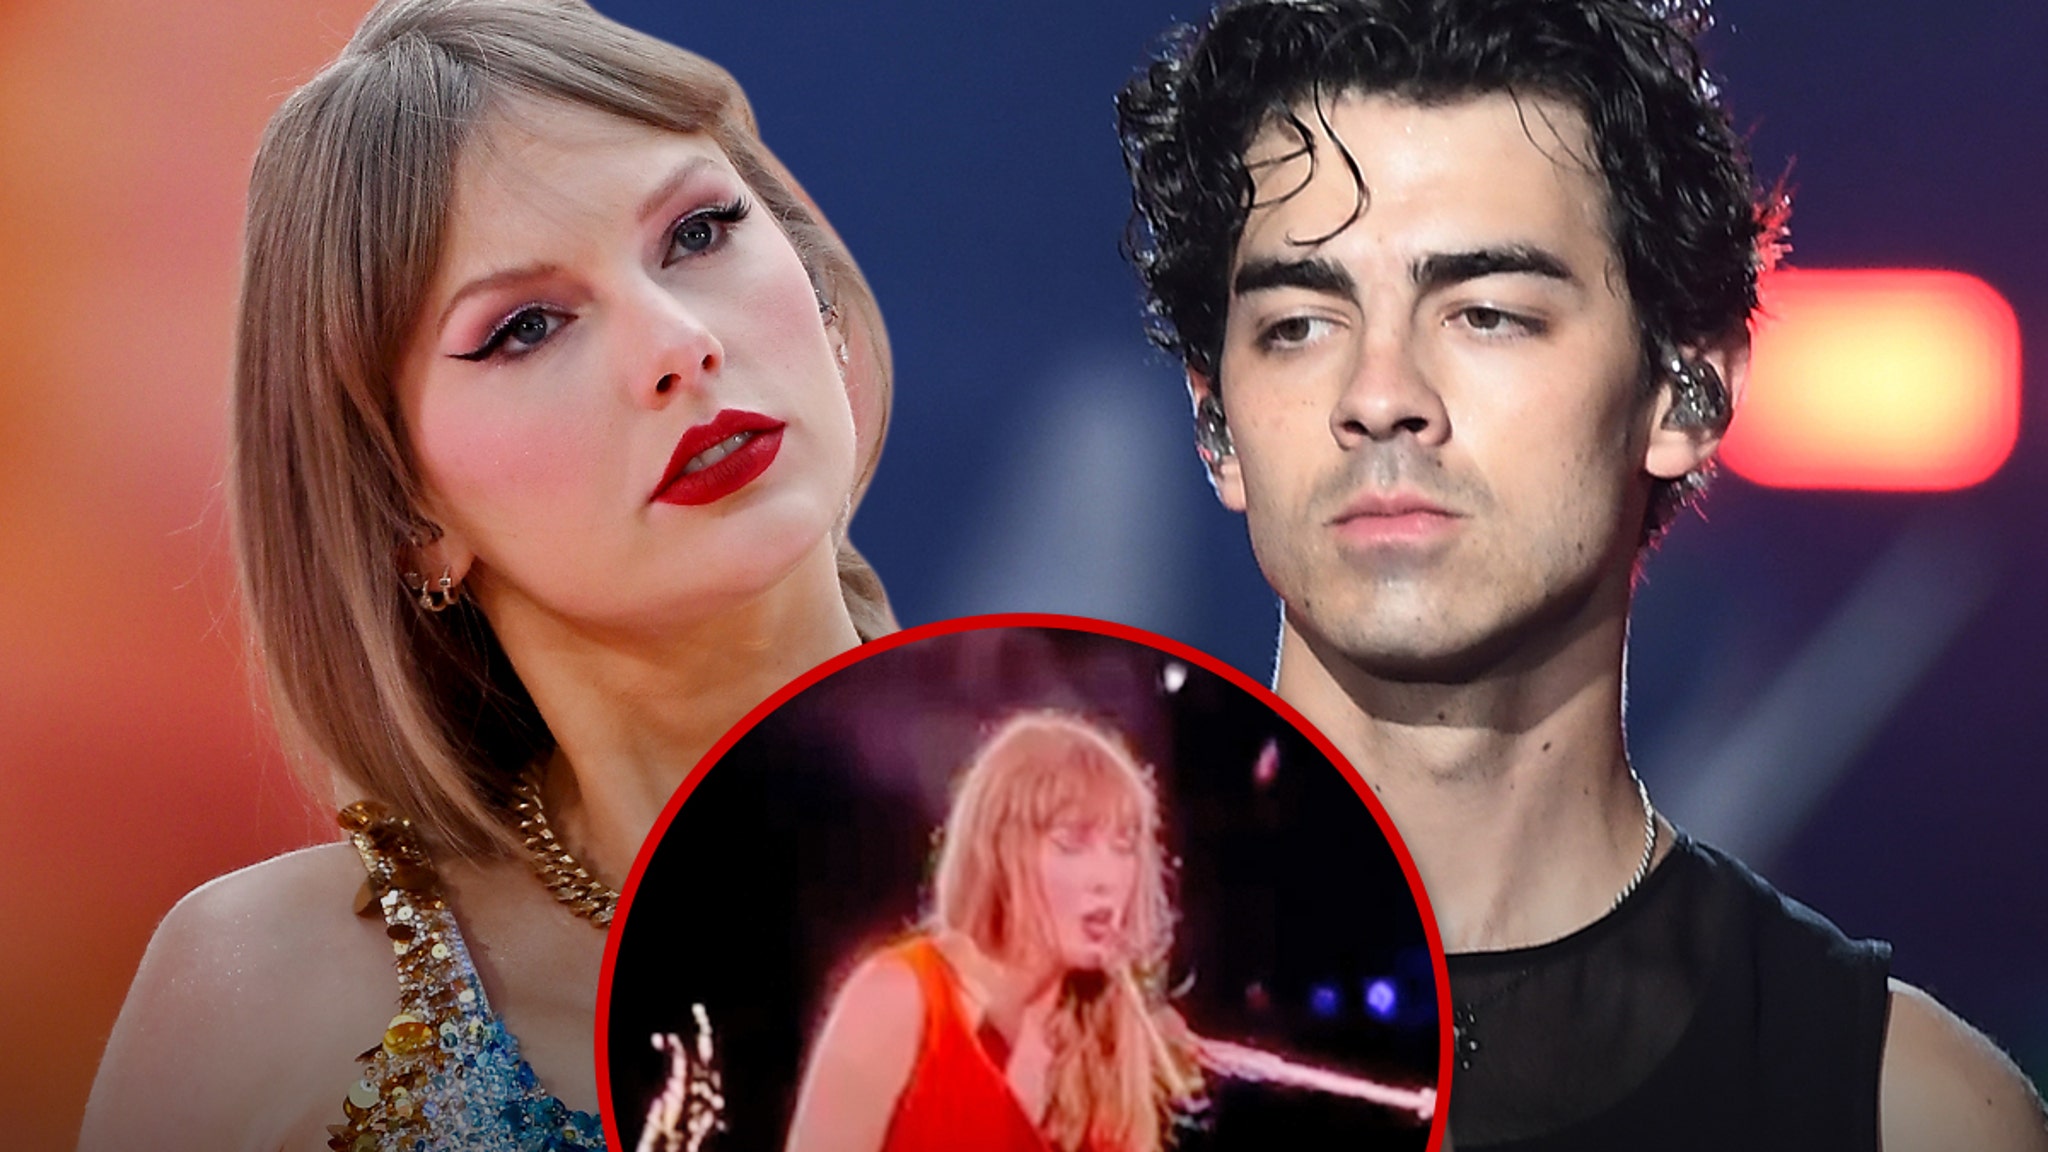 Taylor Swift remembers the “era” of Joe Jonas and sings a breakup ballad